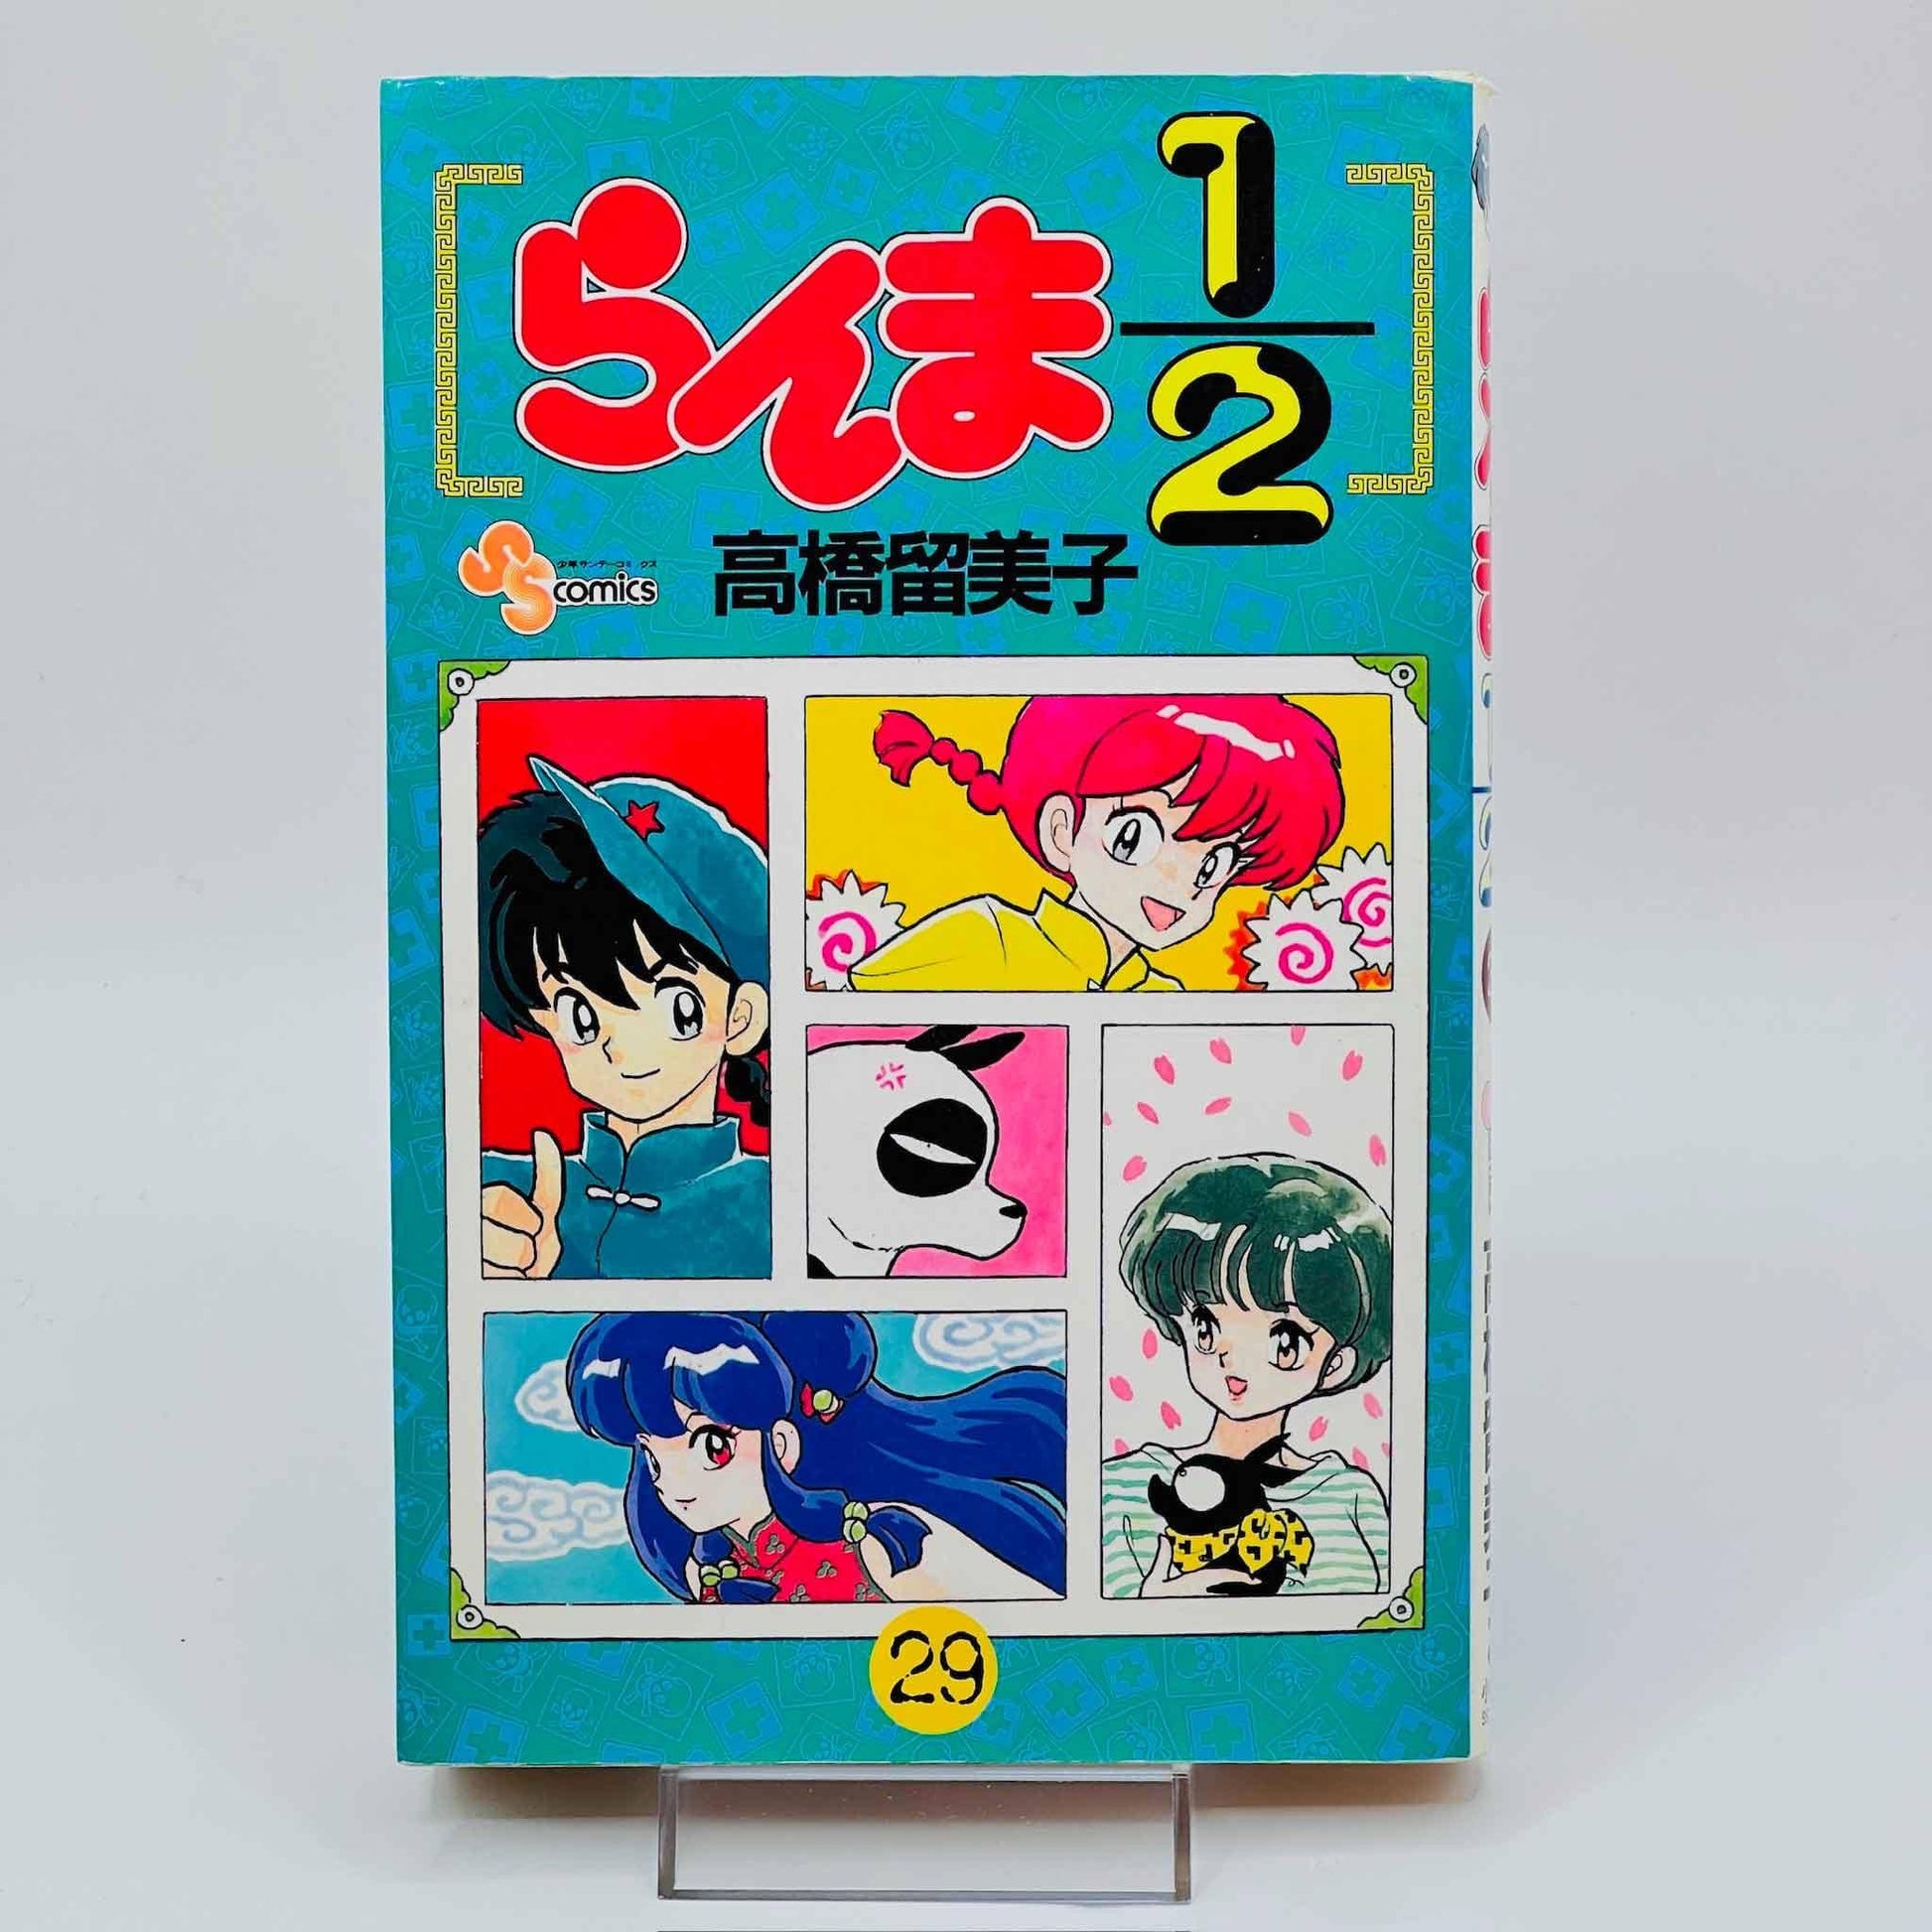 Ranma ½ - Volume 29 - 1stPrint.net - 1st First Print Edition Manga Store - M-RANMA-29-001